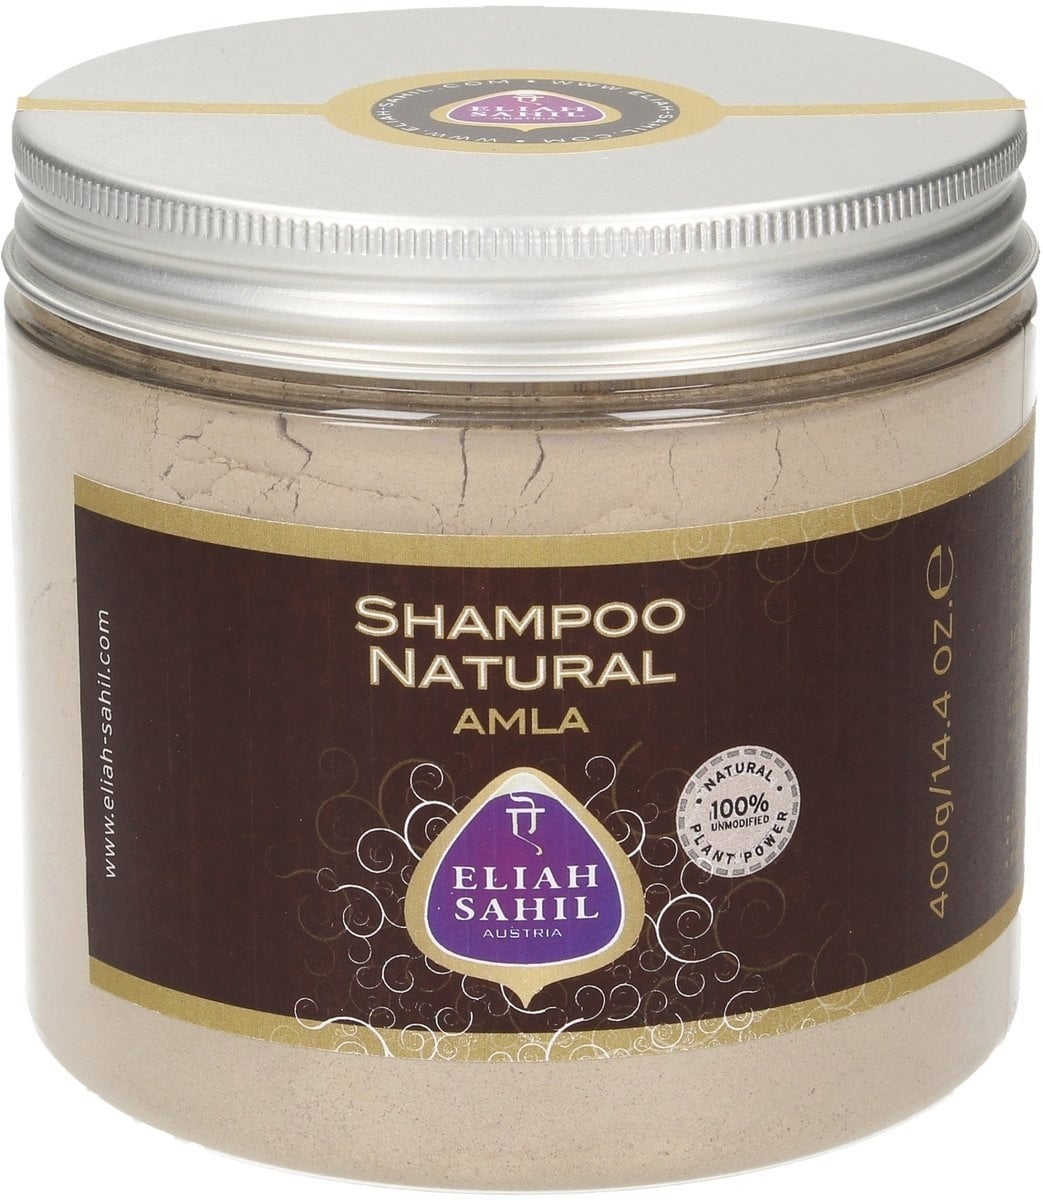 Eliah Sahil Amla Natural Shampoo Powder - 400 g